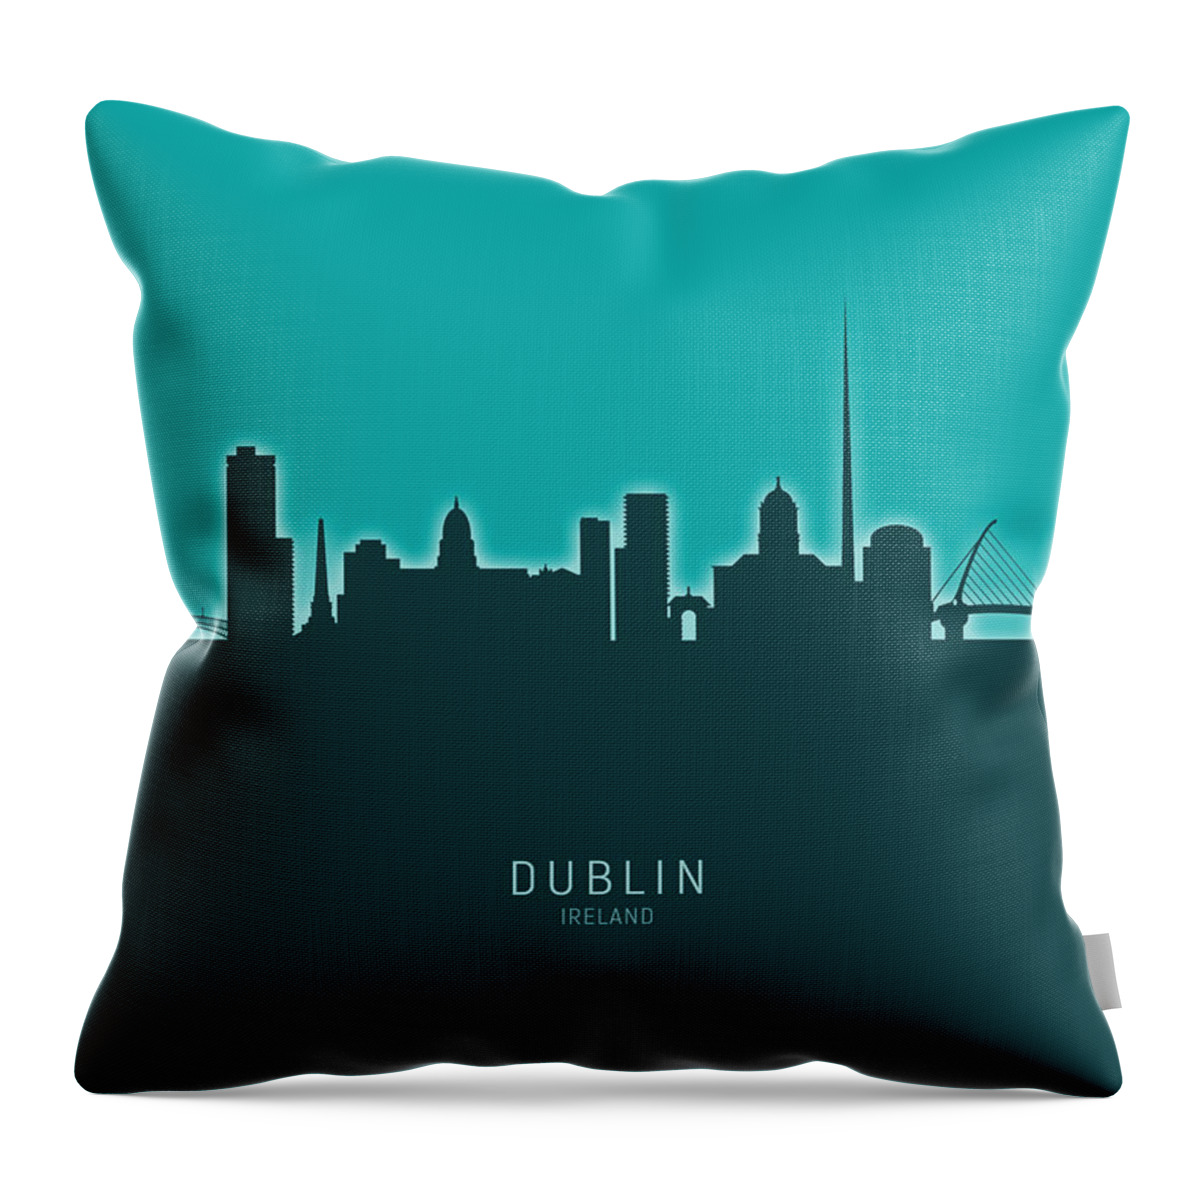 Dublin Throw Pillow featuring the digital art Dublin Ireland Skyline #38 by Michael Tompsett